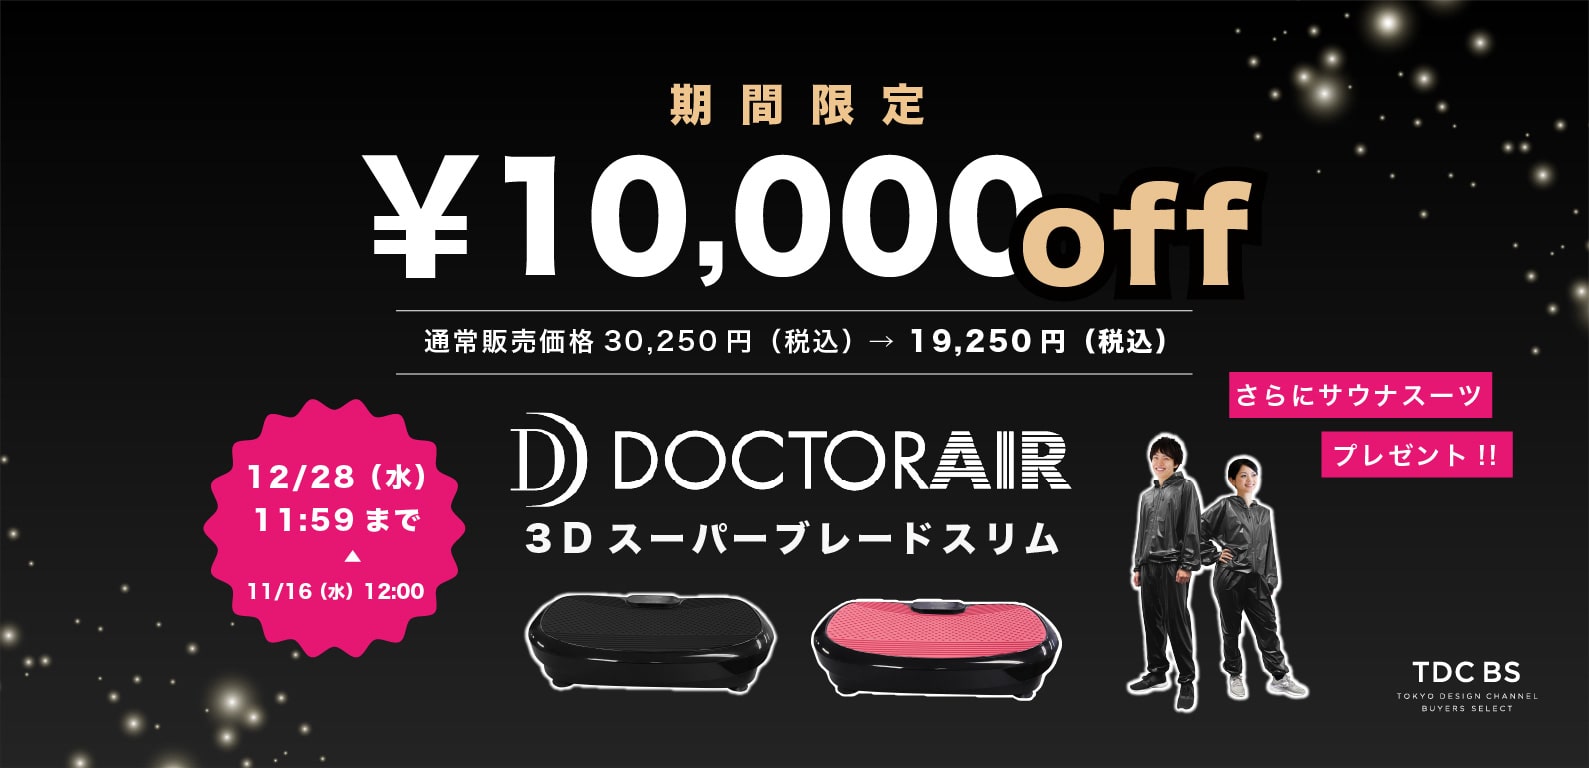 DOCTOR AIR ドクターエア ３Dスーパーブレードスリム 期間限定10,000円OFF 